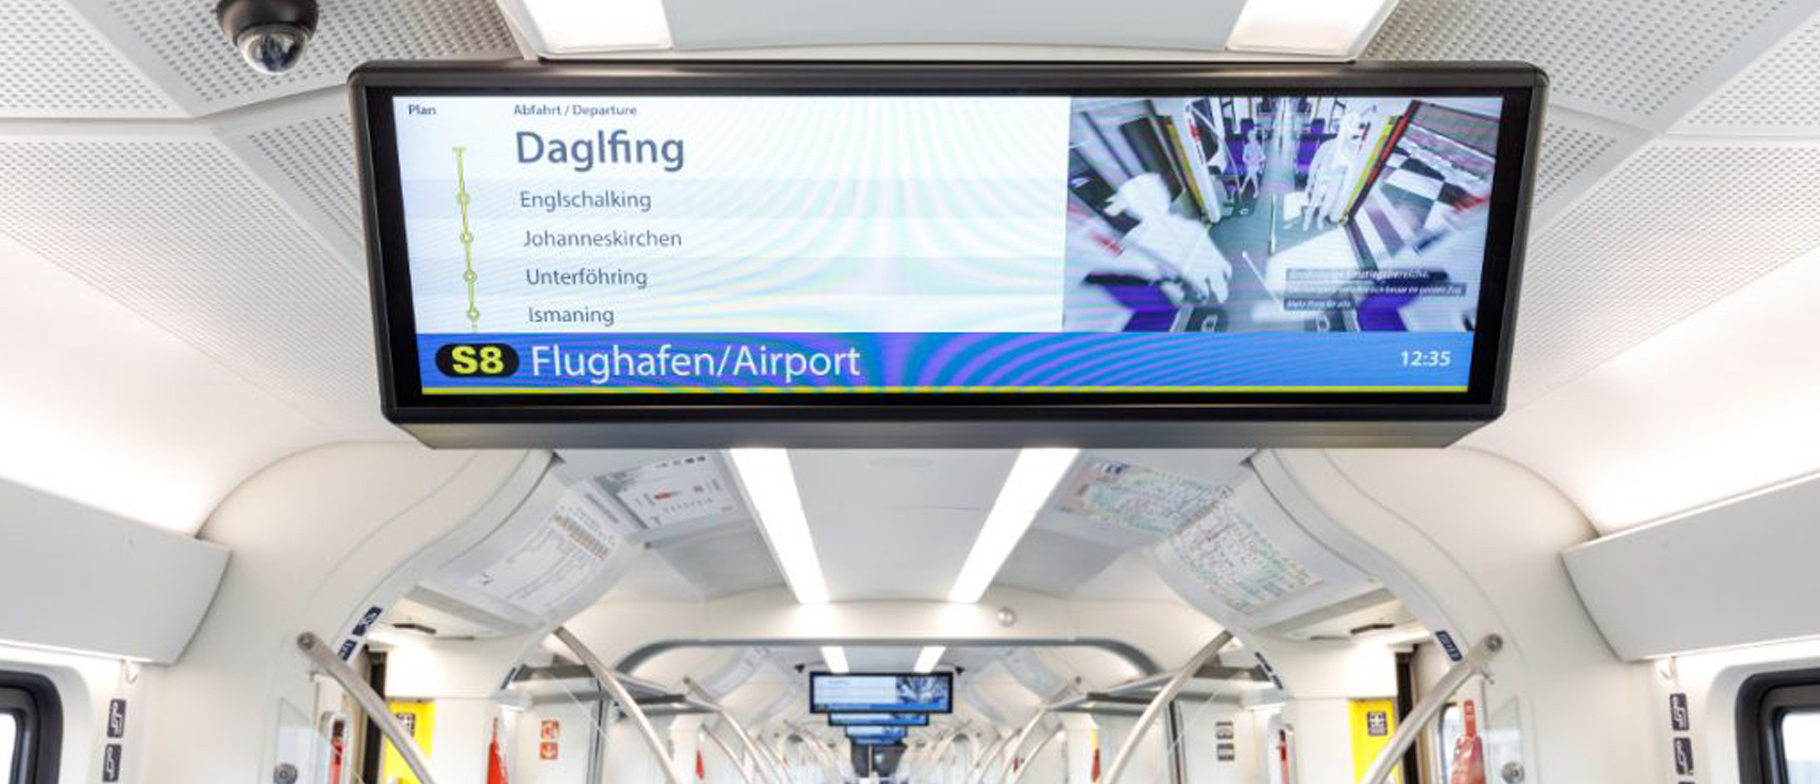 2018-07-MUC-DB-S-Bahn-Displays1-1024x639.jpg